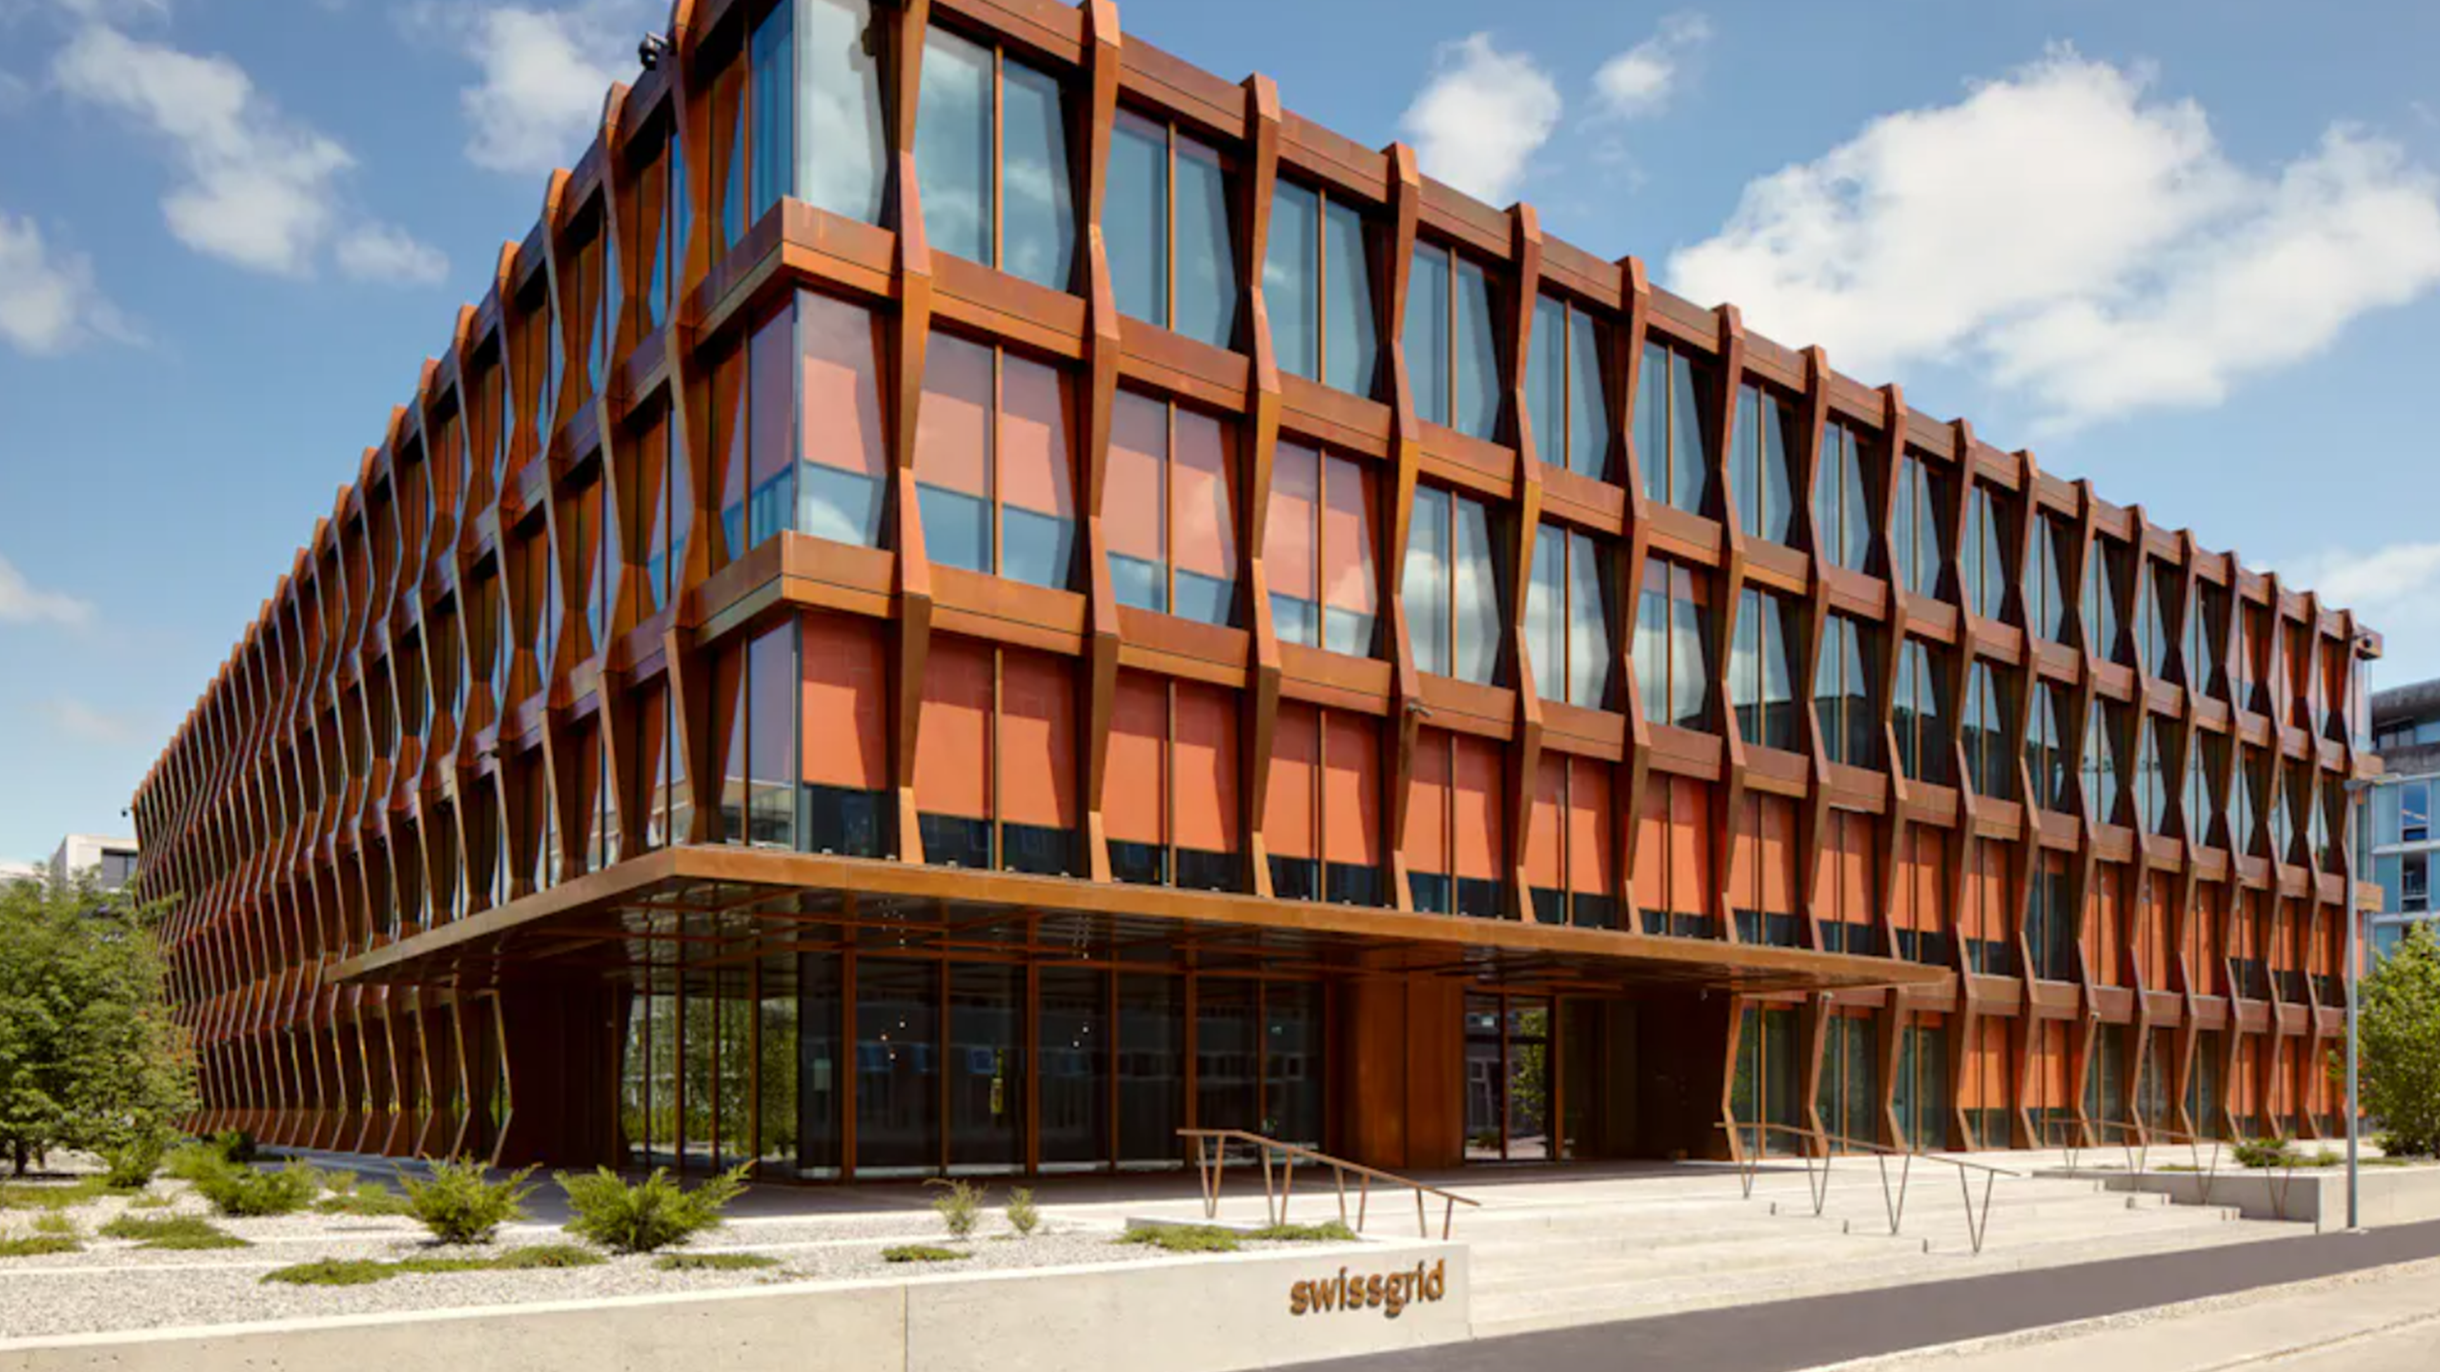 Swissgrid Headquarter